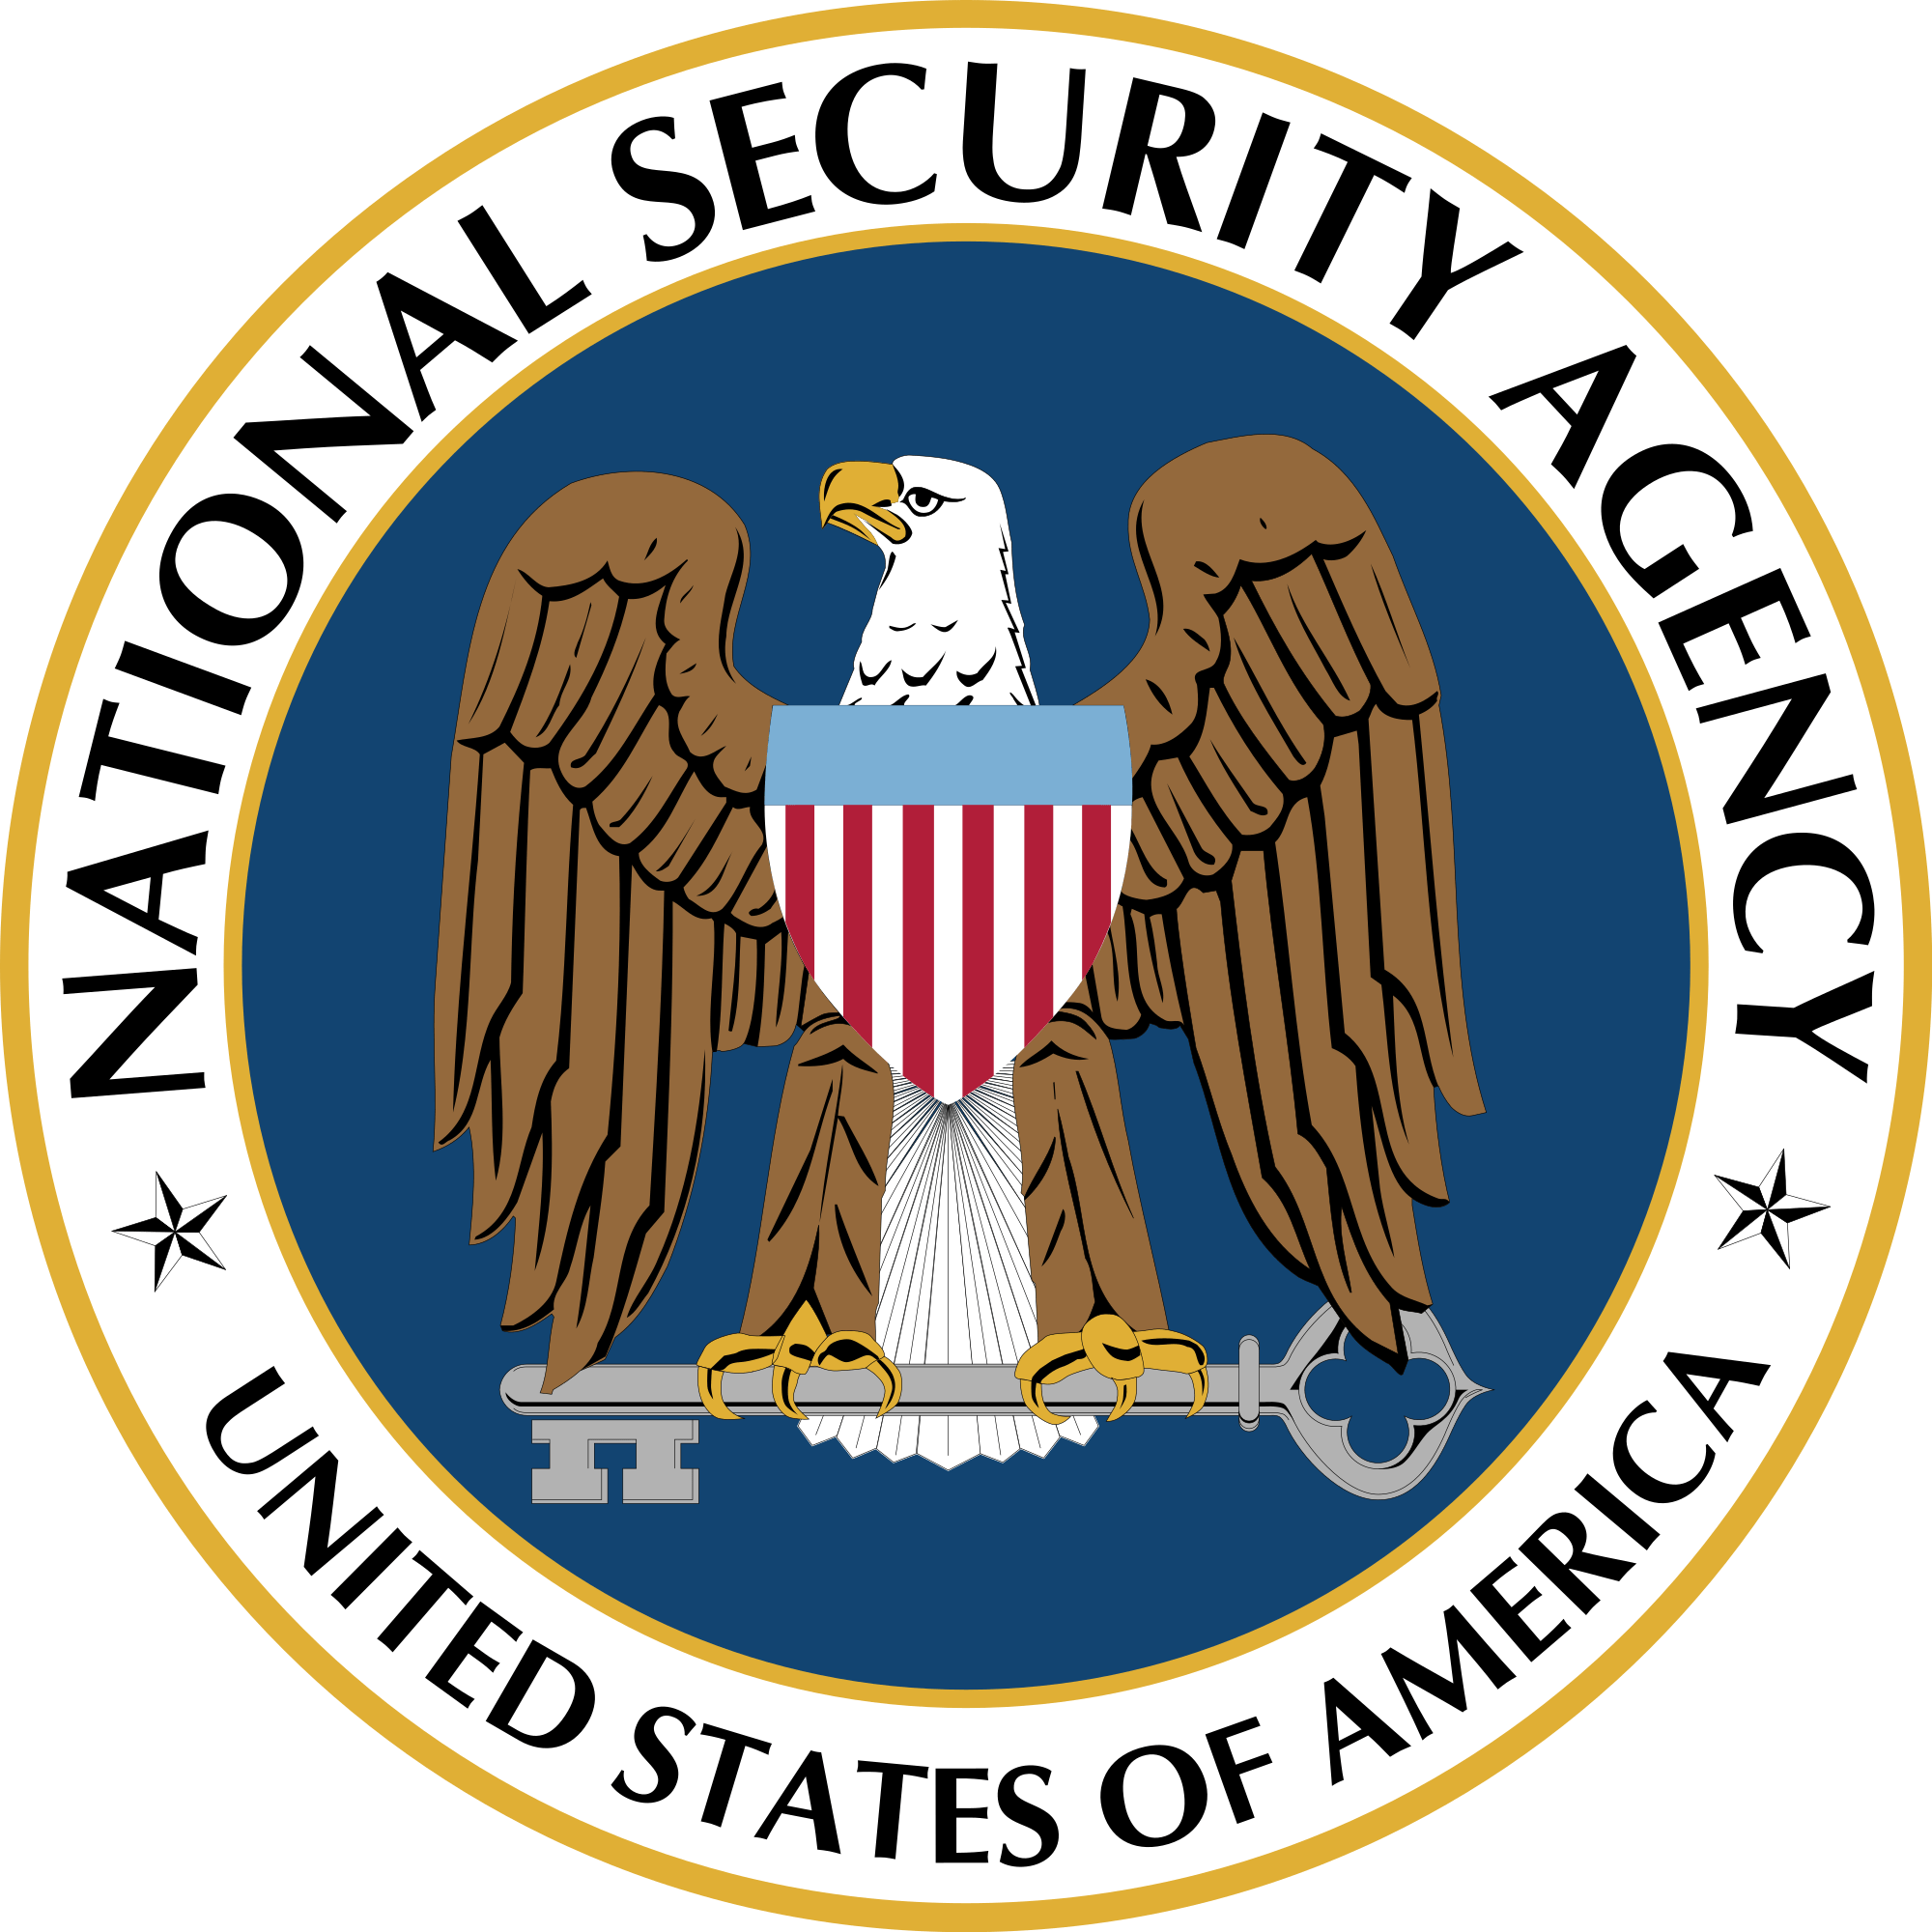 USA National Security Agency Logo